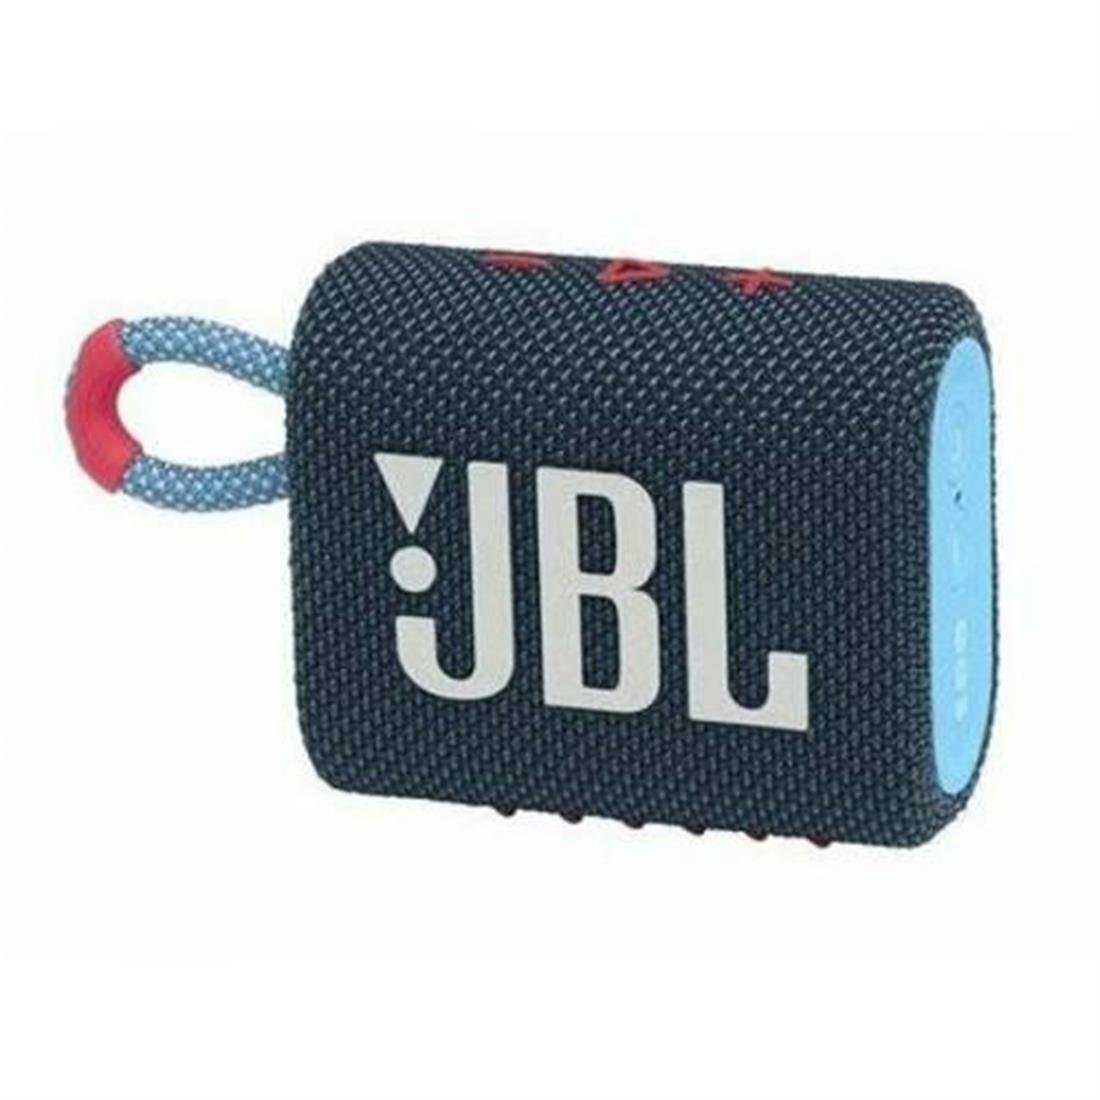 JBL GO3 BLUETOOTH SPEAKER BLUE PINK 6925281979187